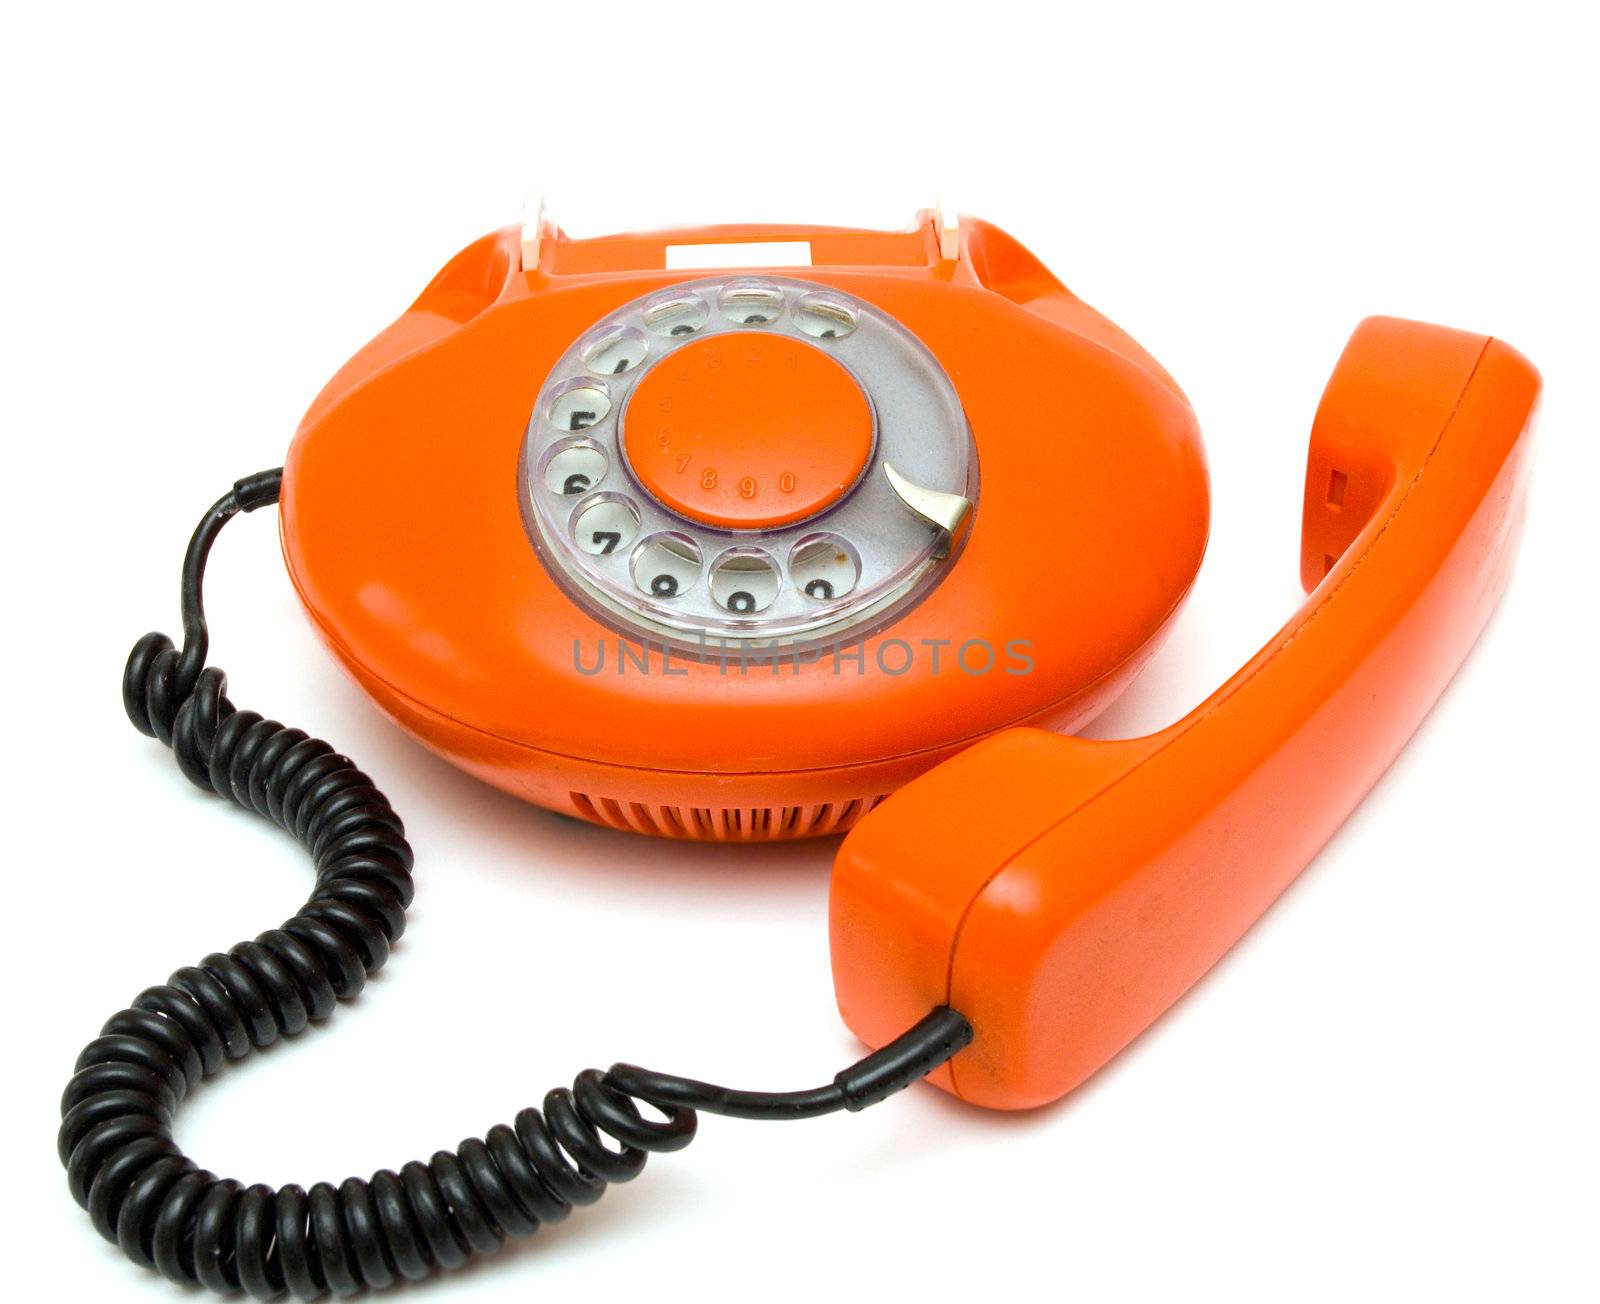 old red phone by semenovp